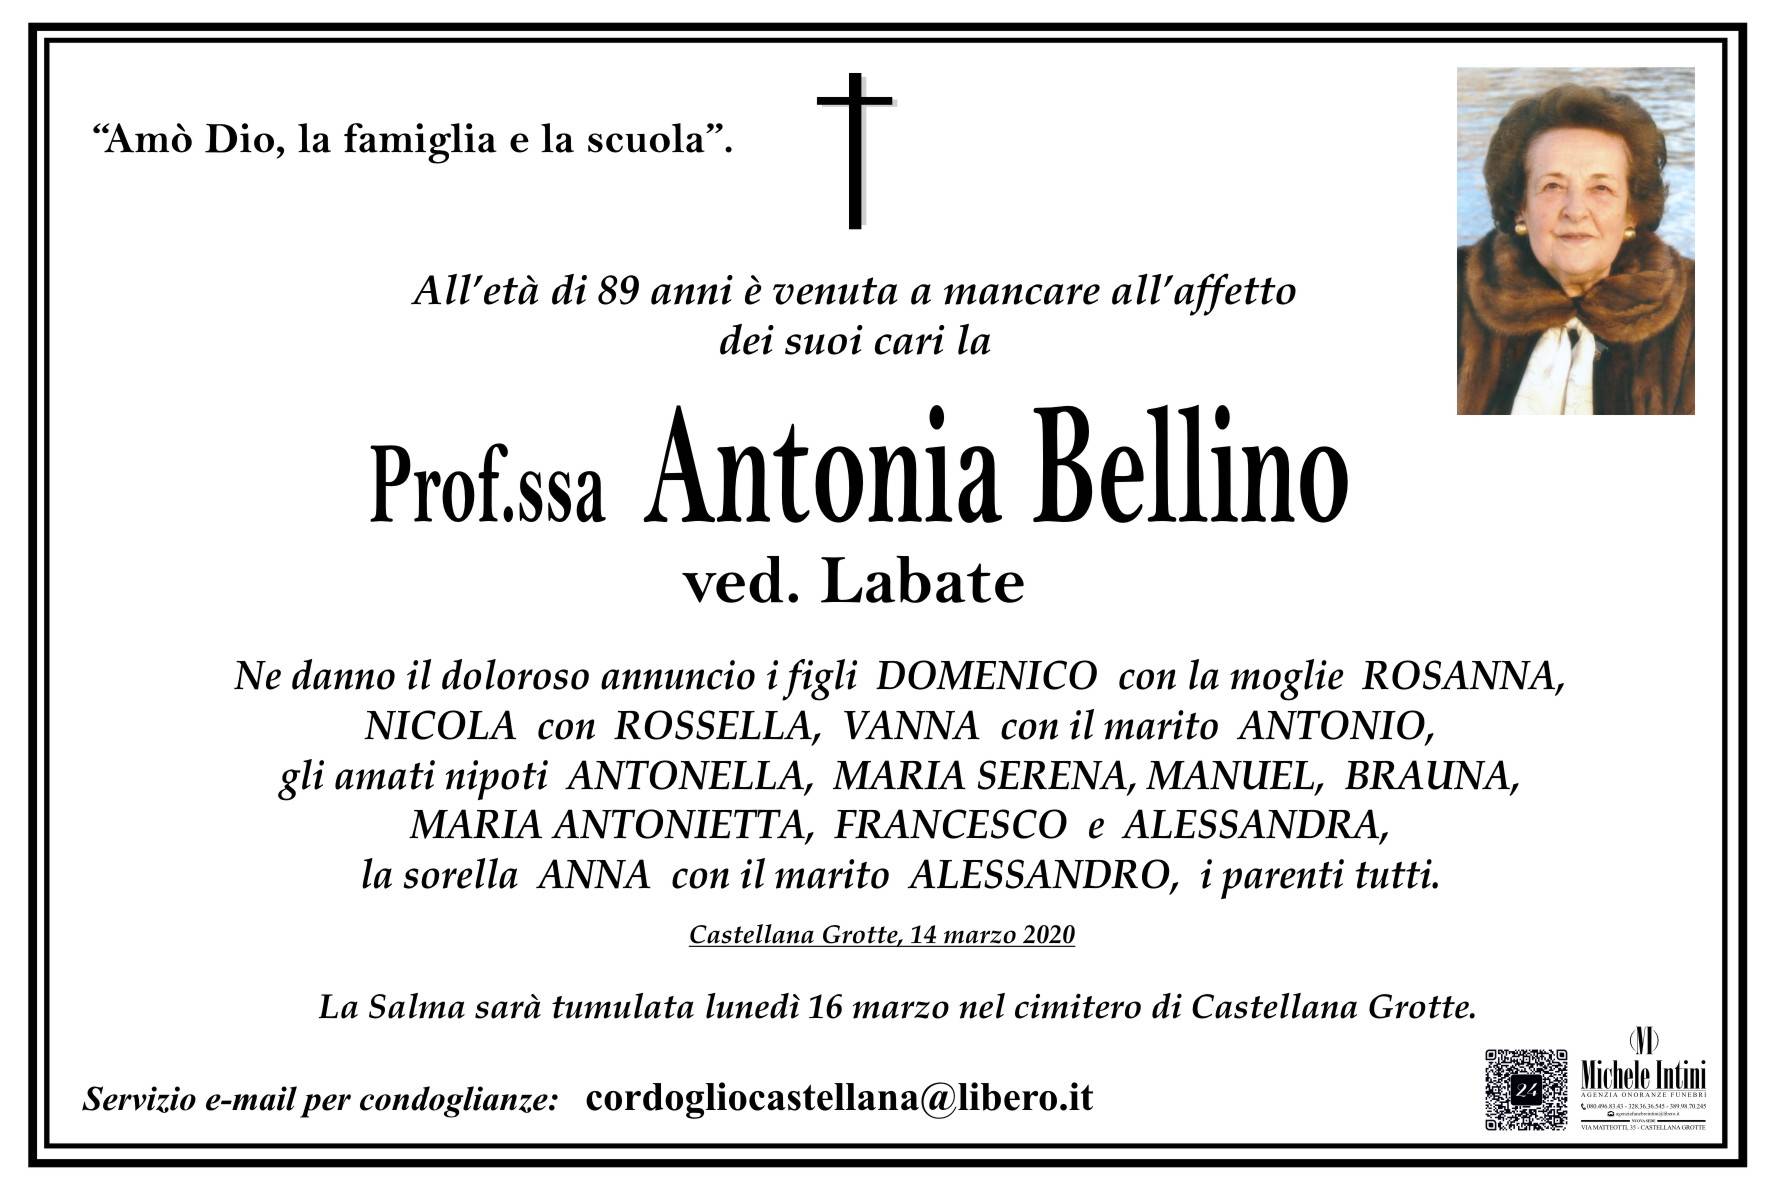 Antonia Bellino